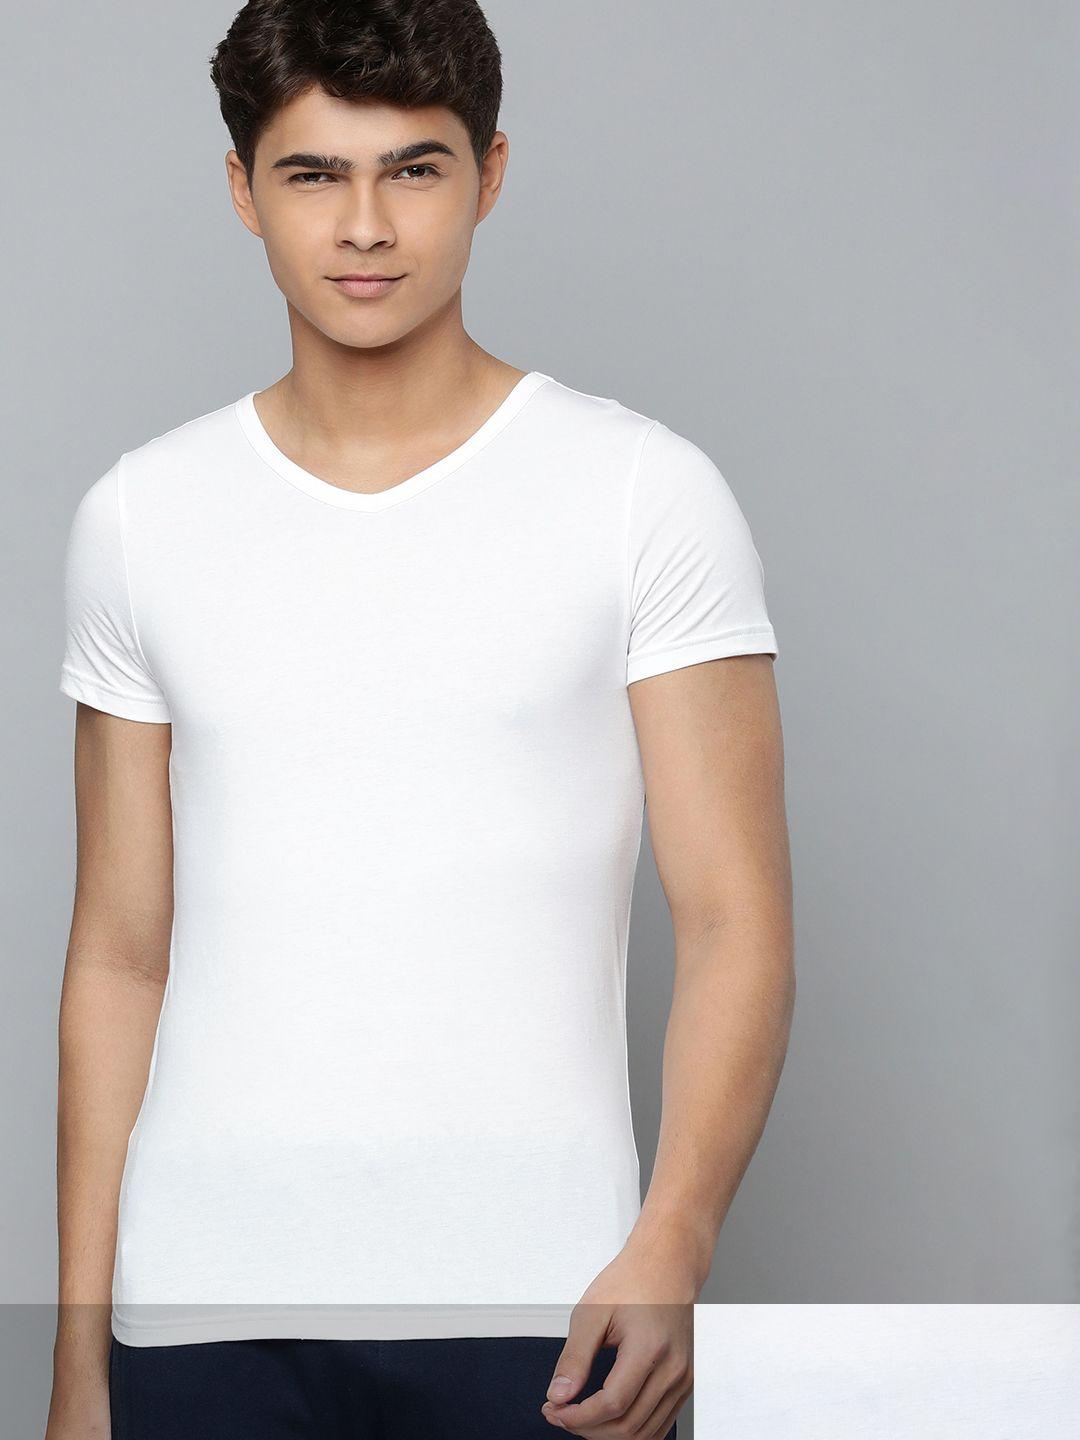 puma men white v-neck solid pure cotton t-shirt pack of 2